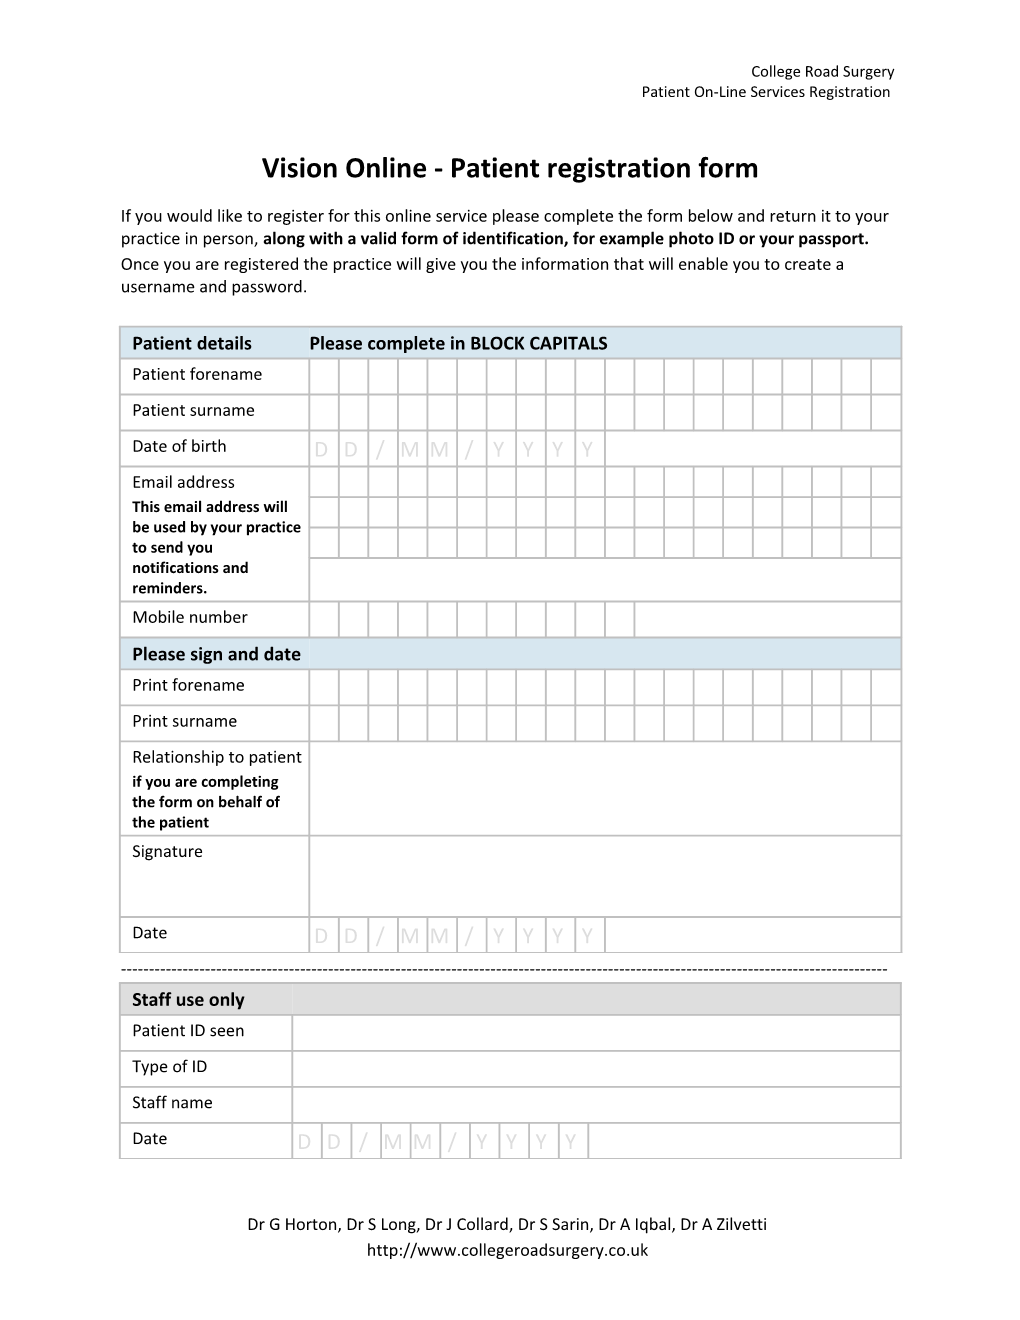 Vision Online - Patient Registration Form